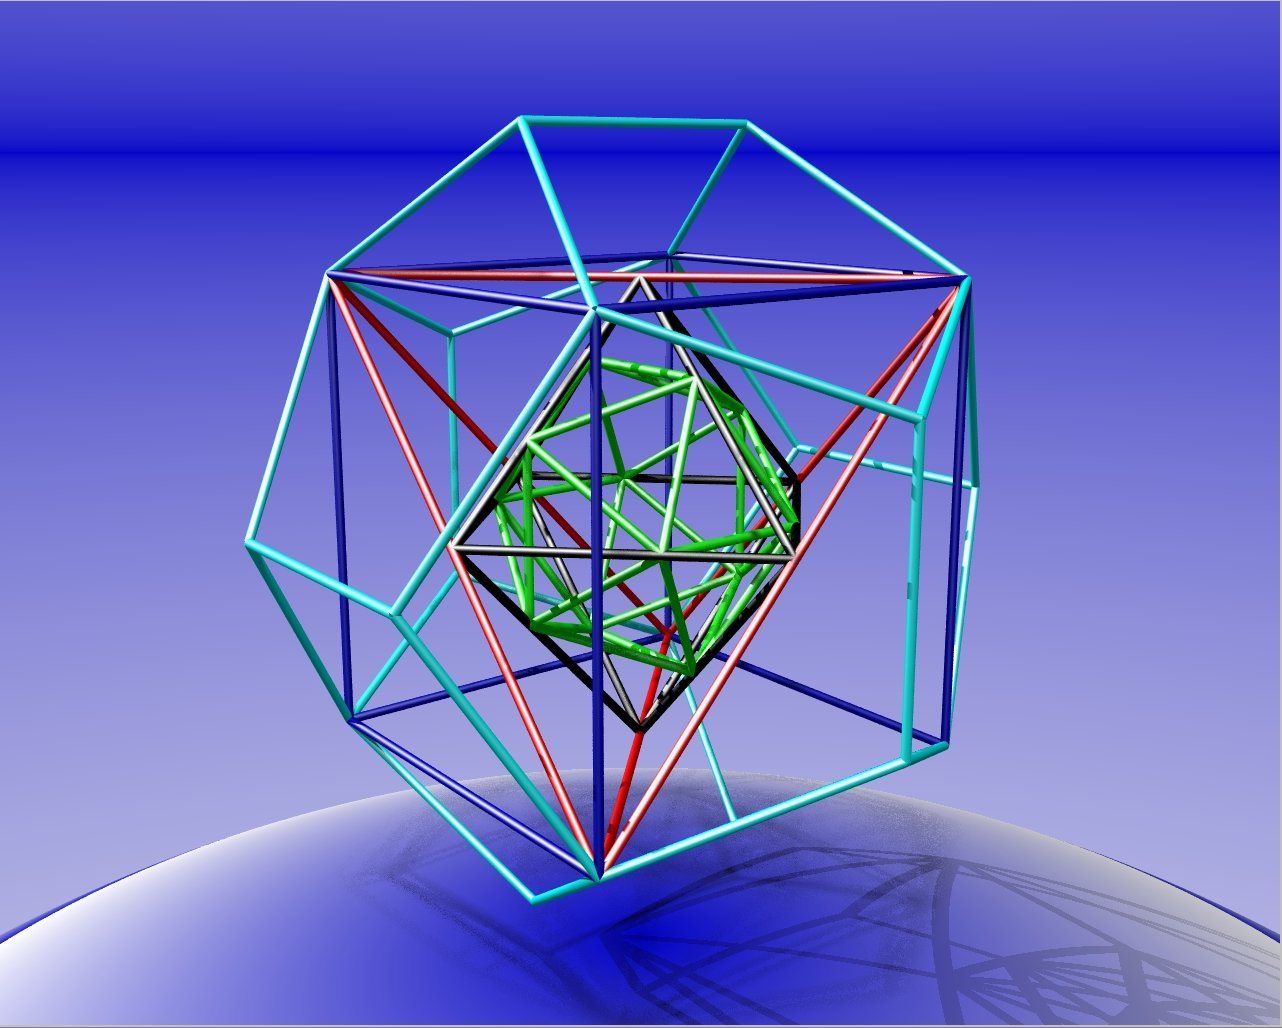 5 nested Platonic solids